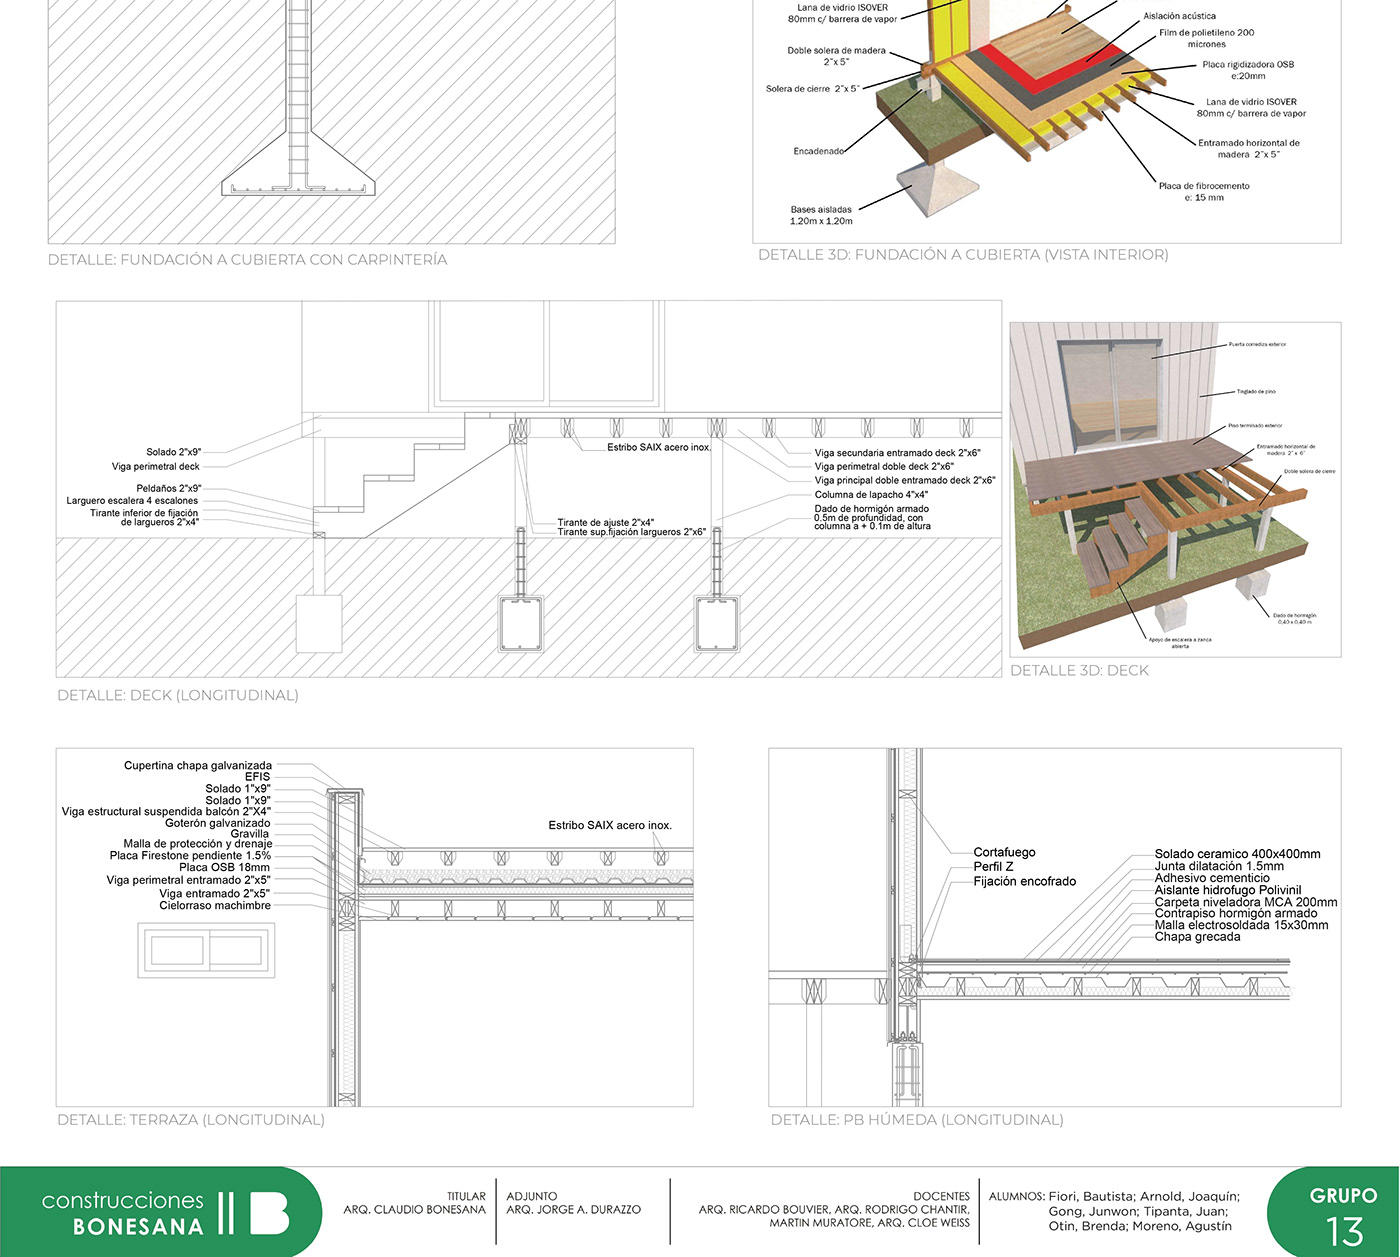 Platform Frame Wood frame sistema constructivo madera industrial design  Render construcción en madera wood architecture